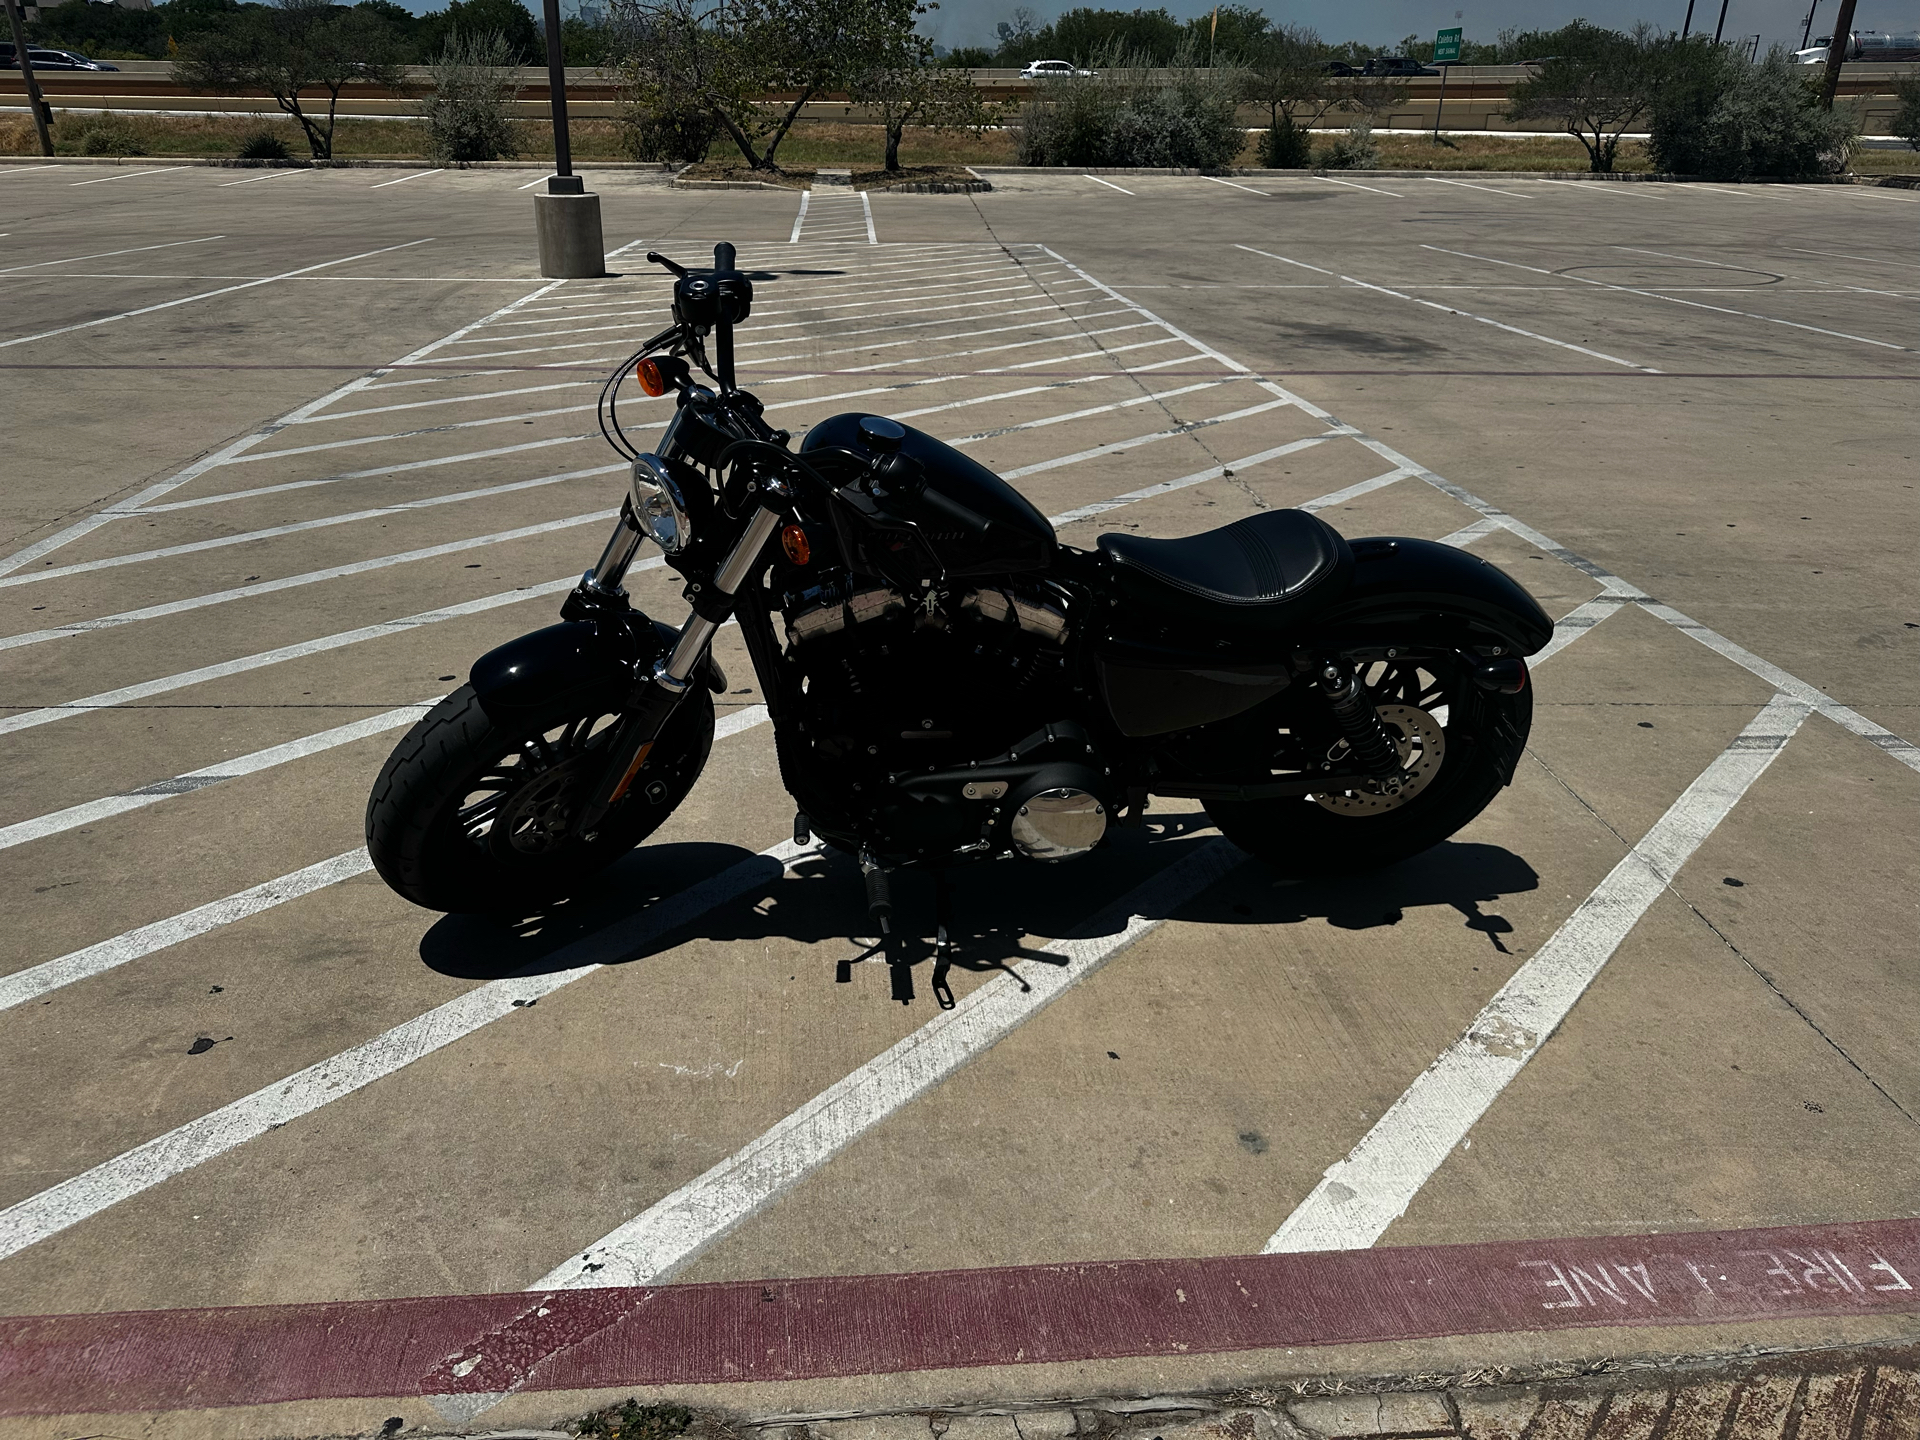 2022 Harley-Davidson Forty-Eight® in San Antonio, Texas - Photo 5